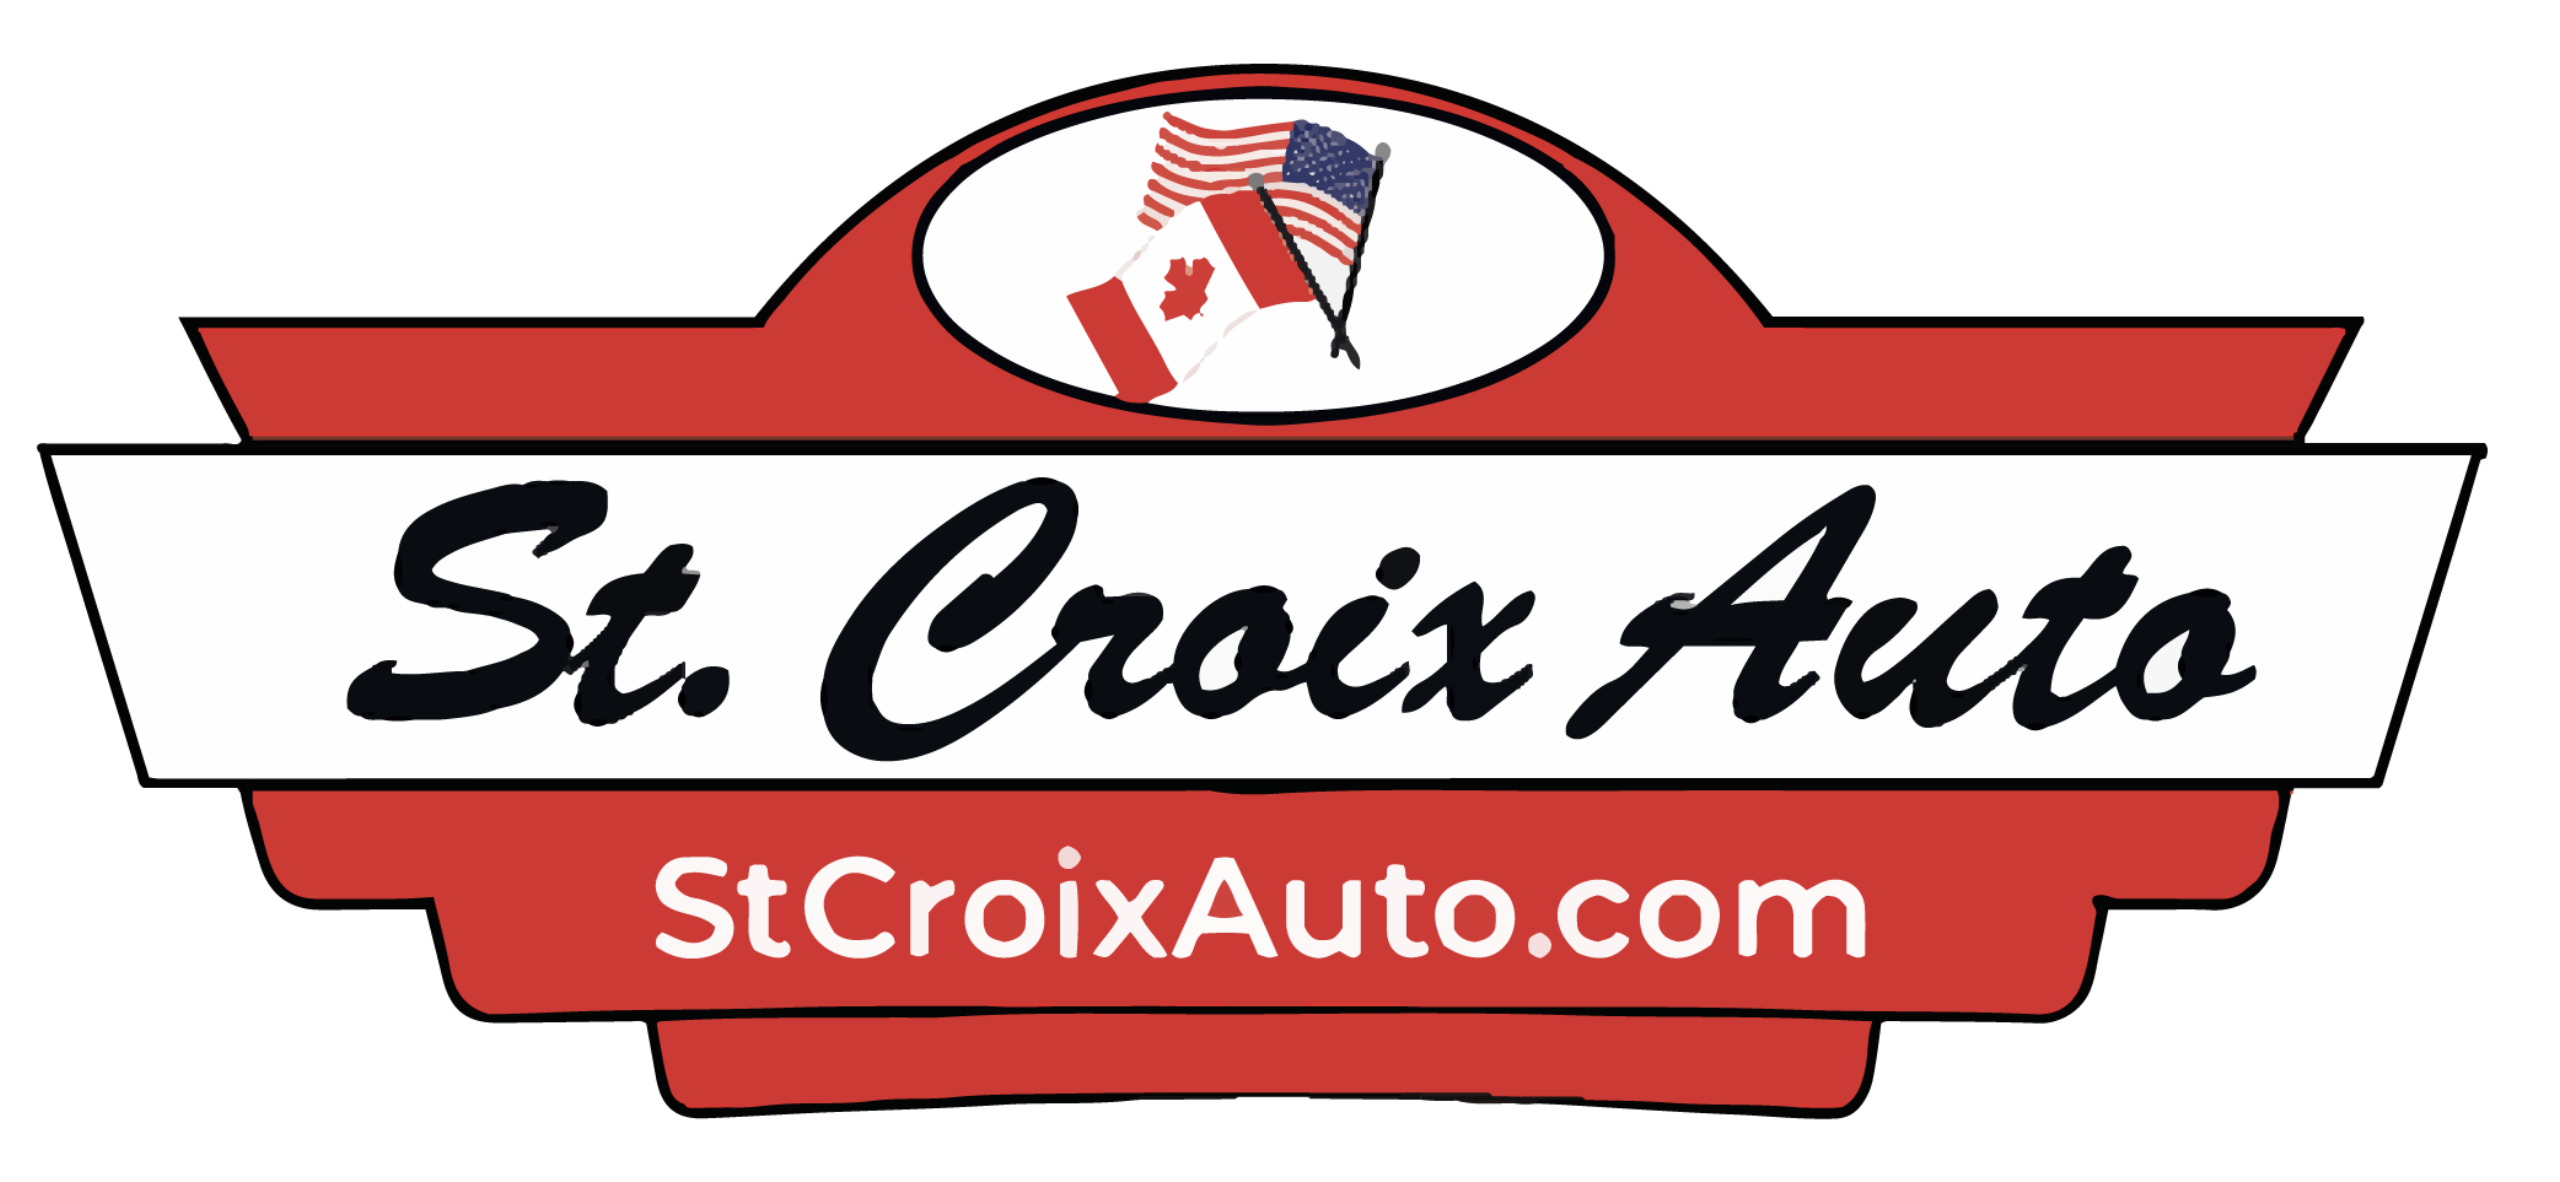 St. Croix Auto Ltd. Logo